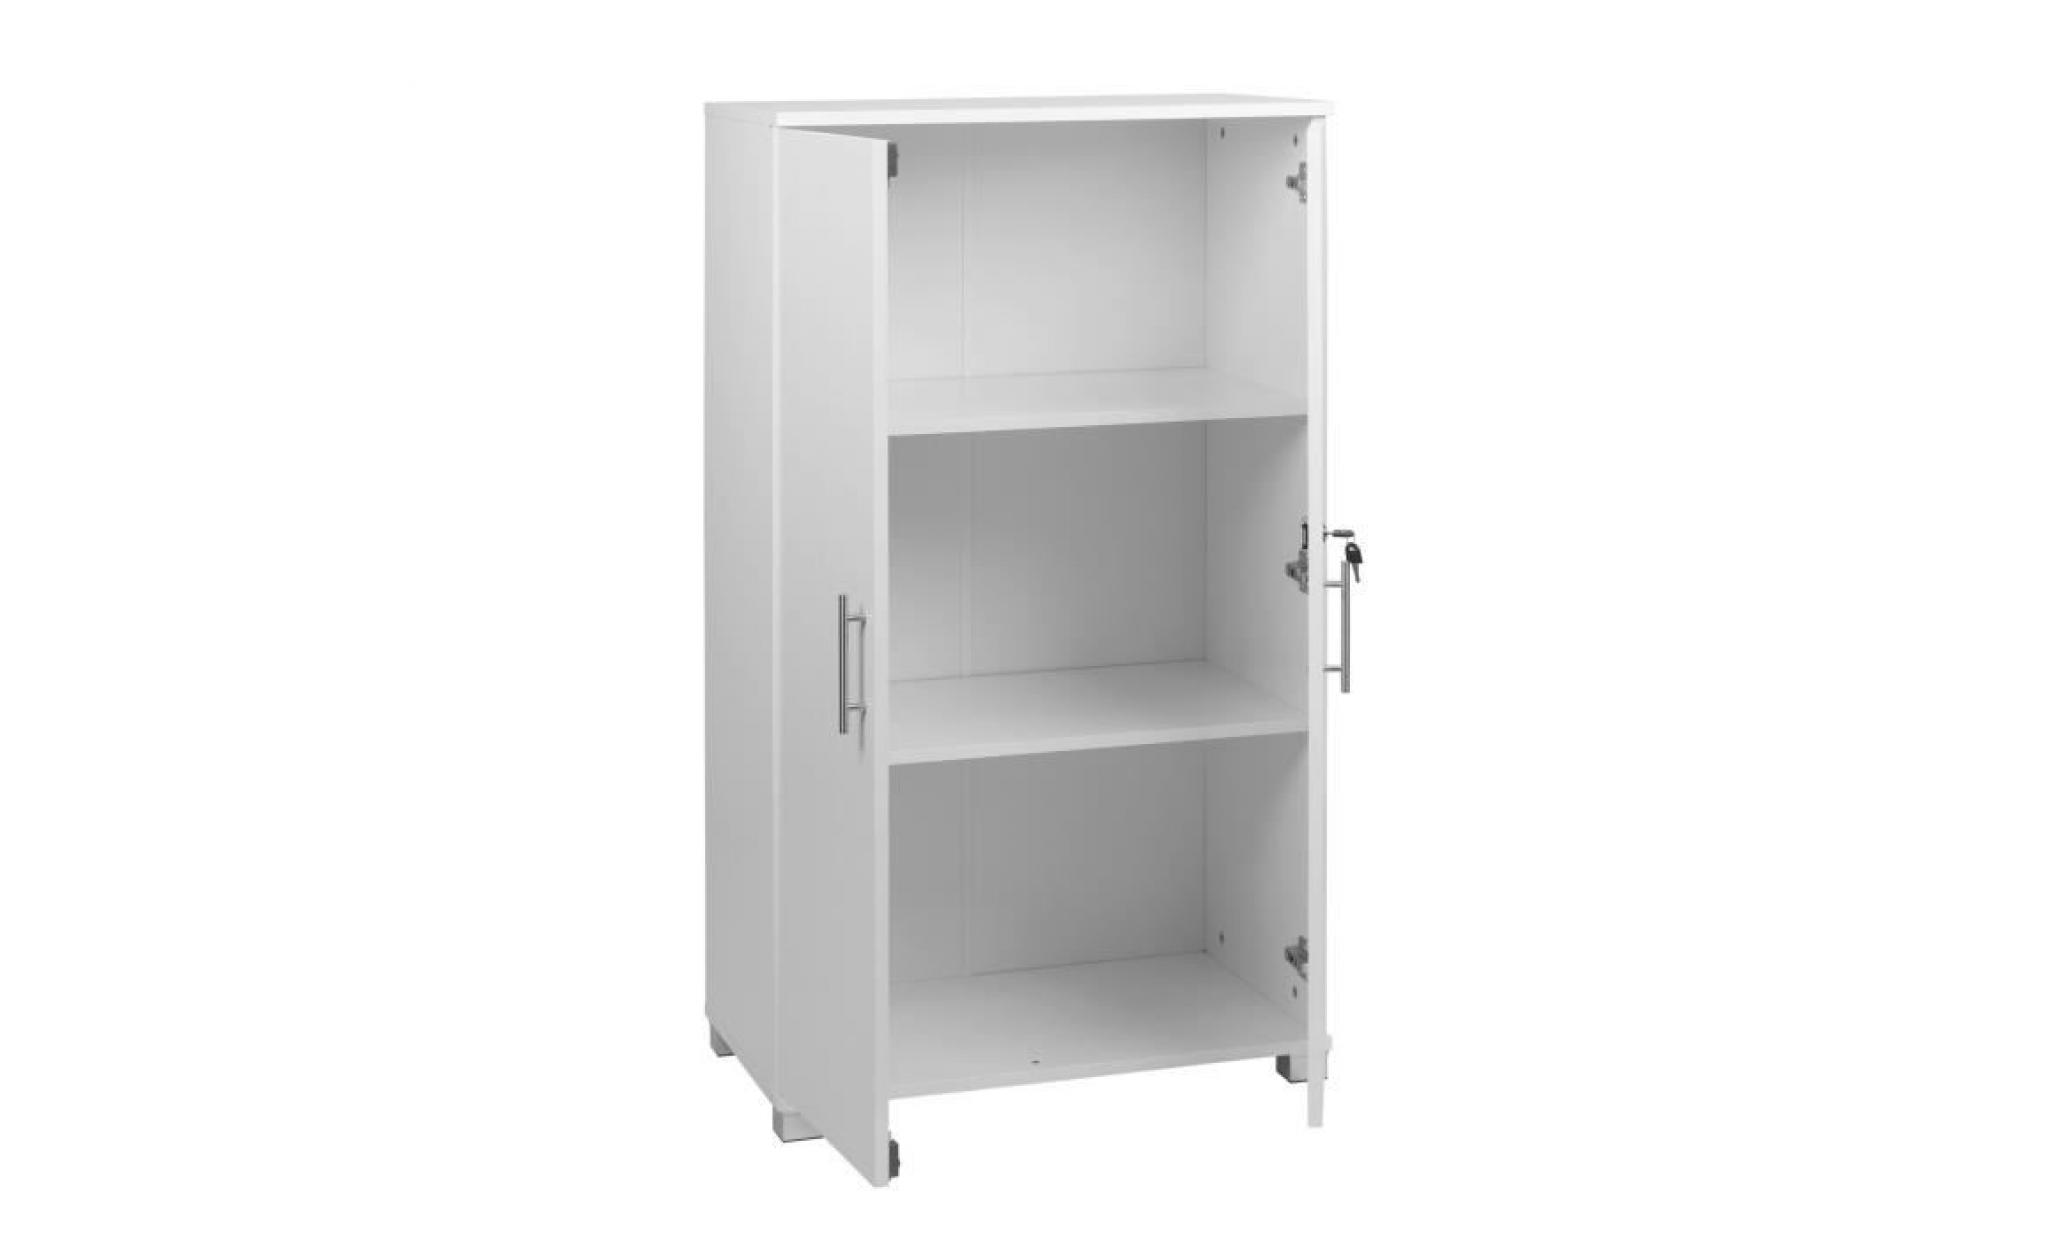 mmt white office 2 door storage bookcase with locking doors 2 internal shelves pas cher